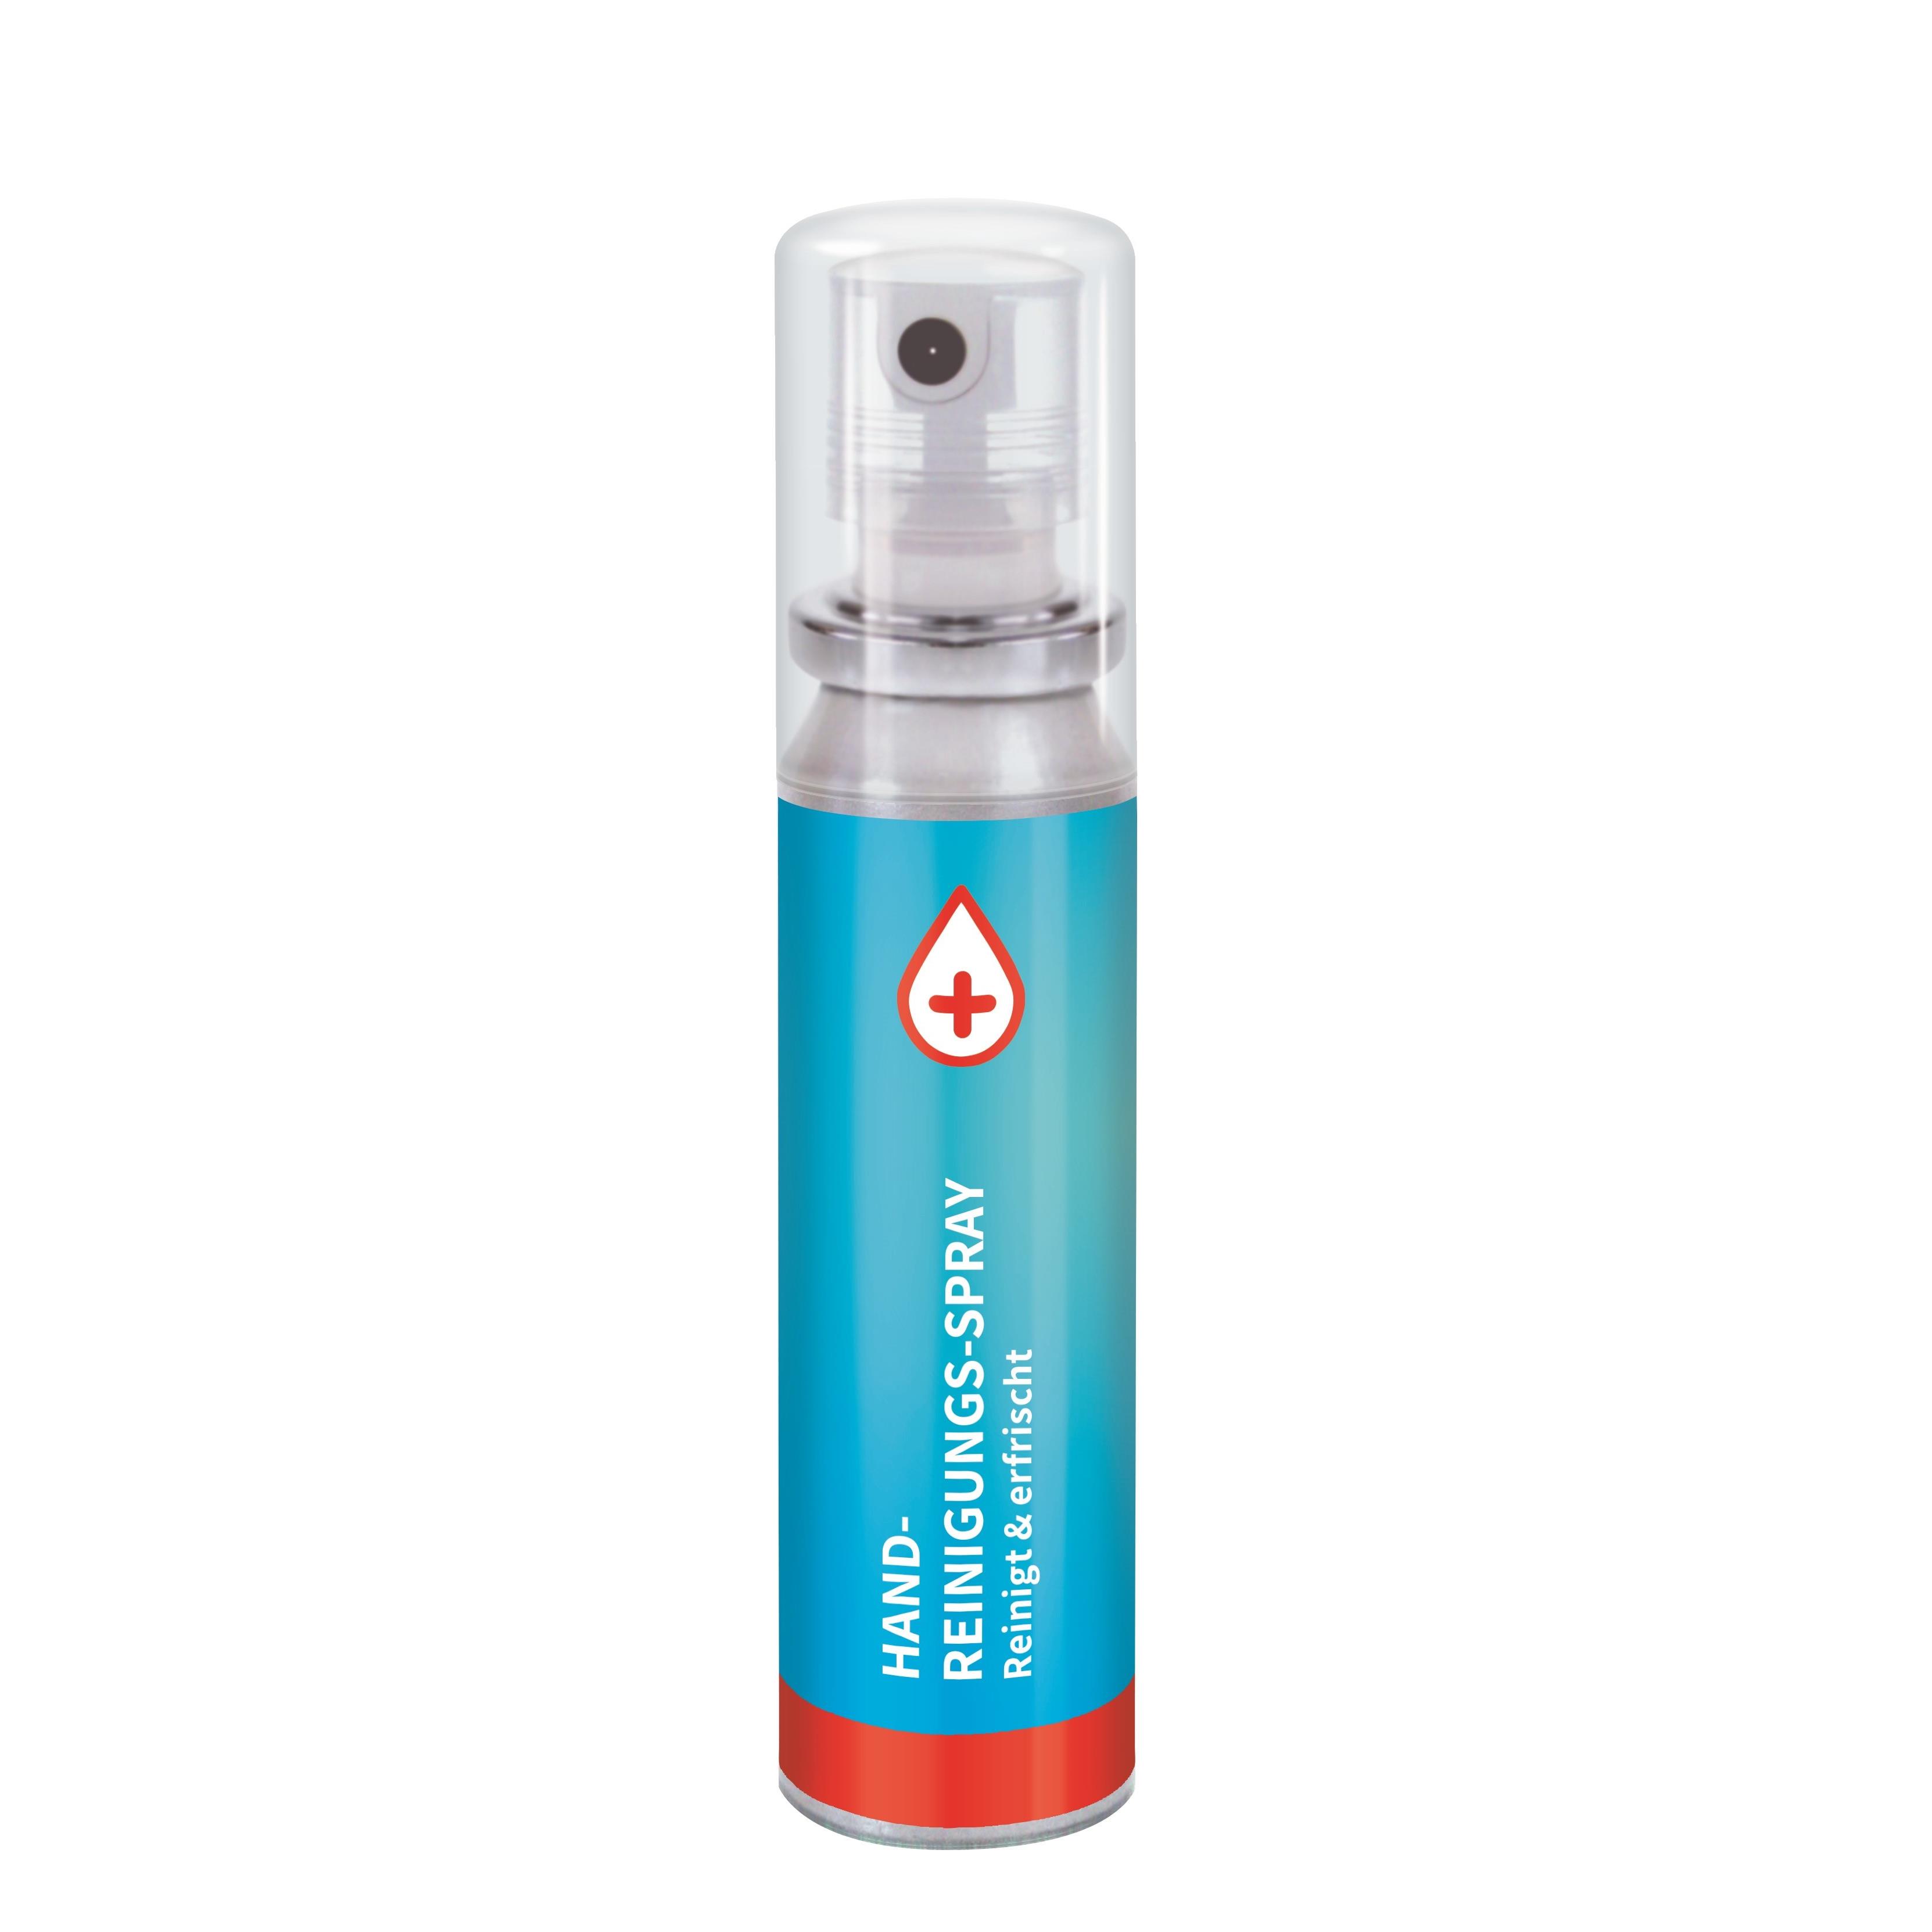 20 ml Pocket Spray  - Handreinigungsspray (alk.) -